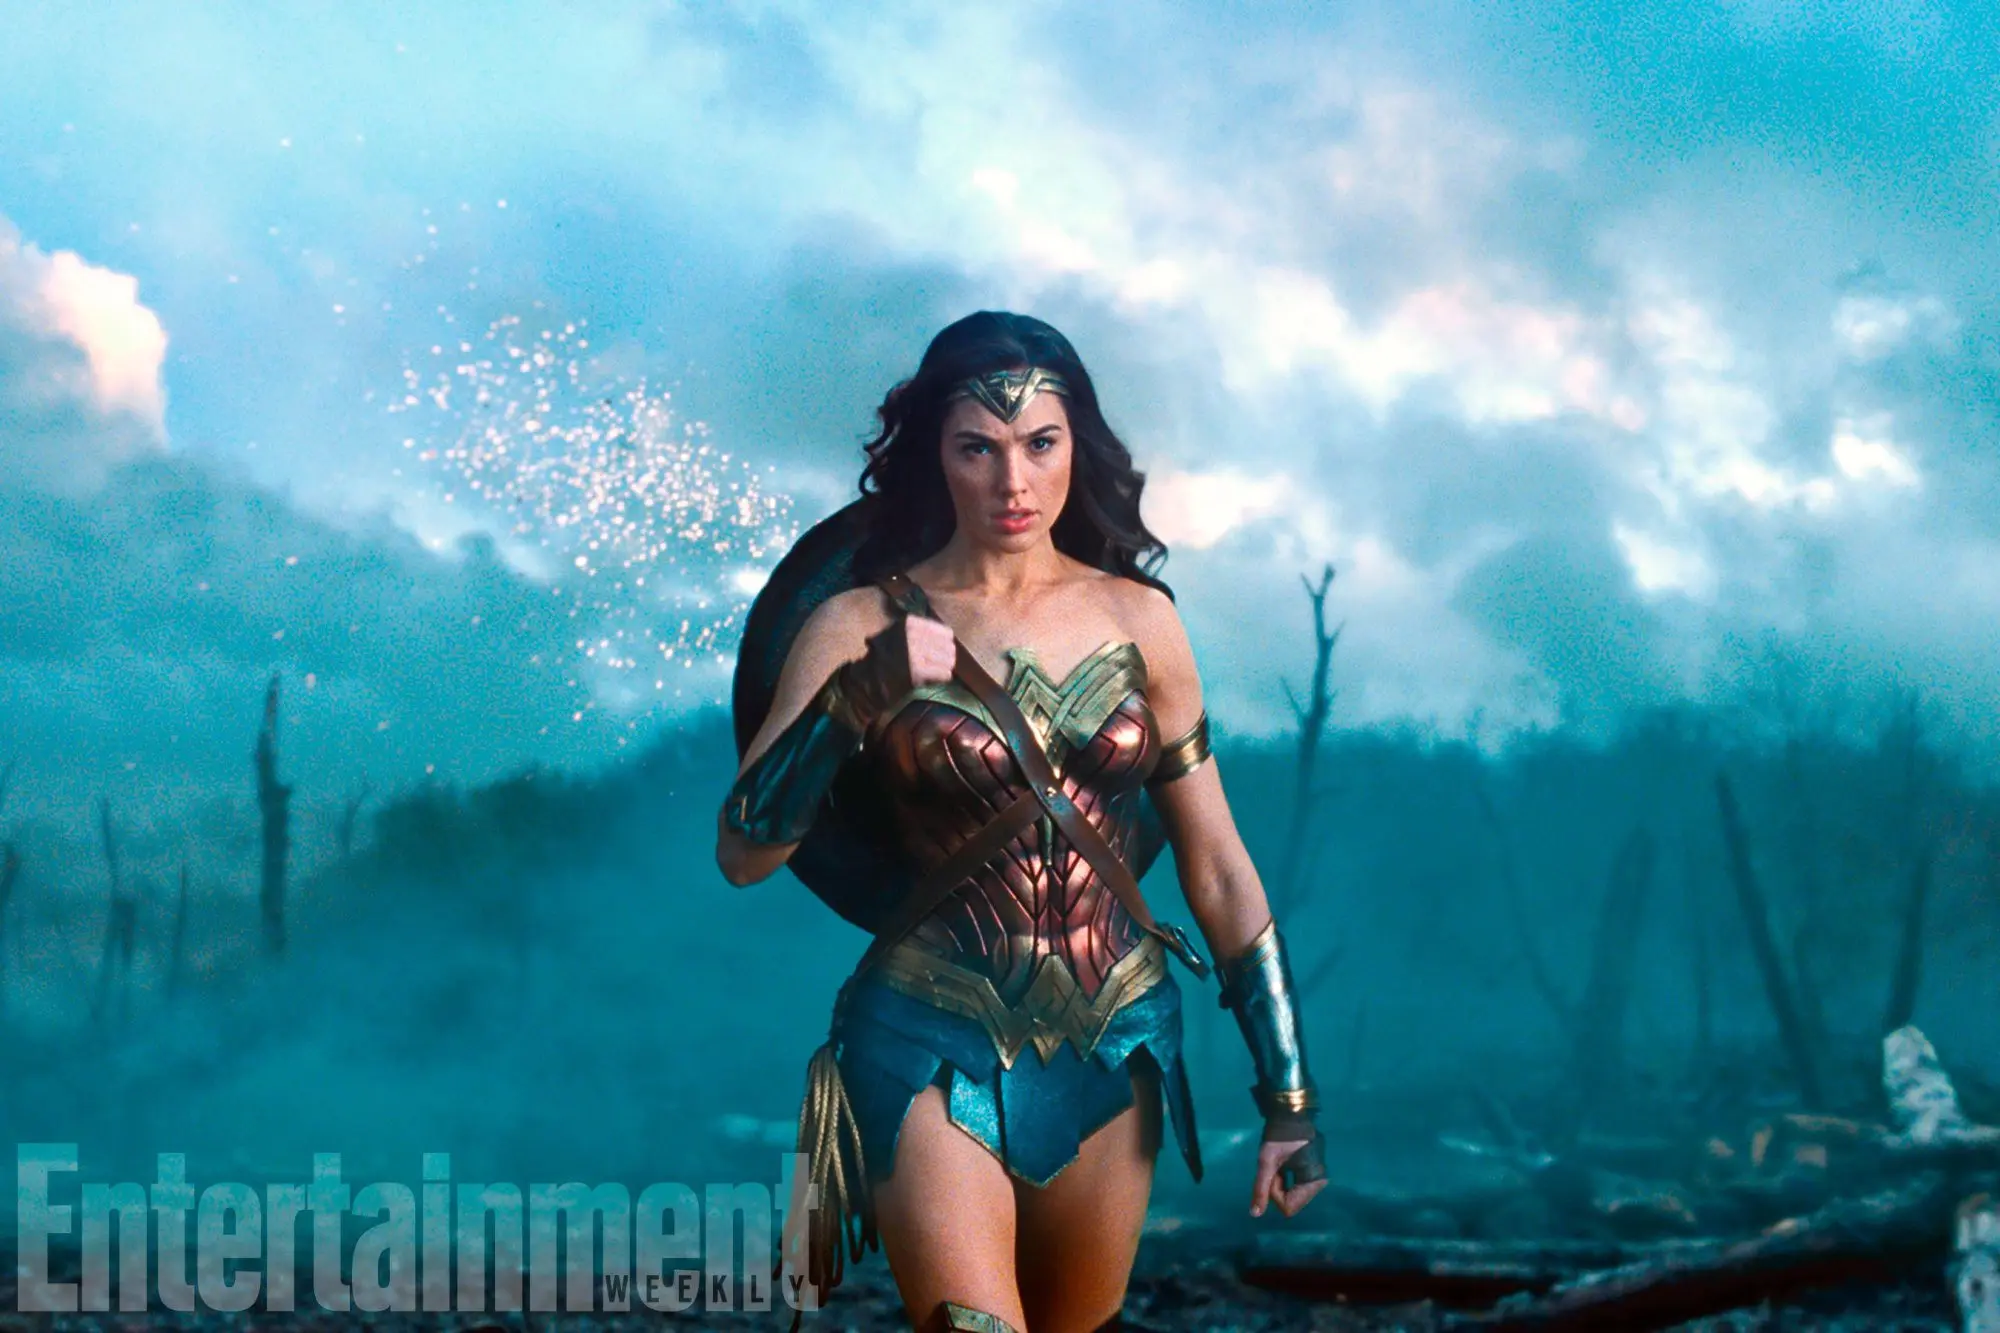 Gal Gadot saat memerankan Wonder Woman. (Entertainment Weekly)